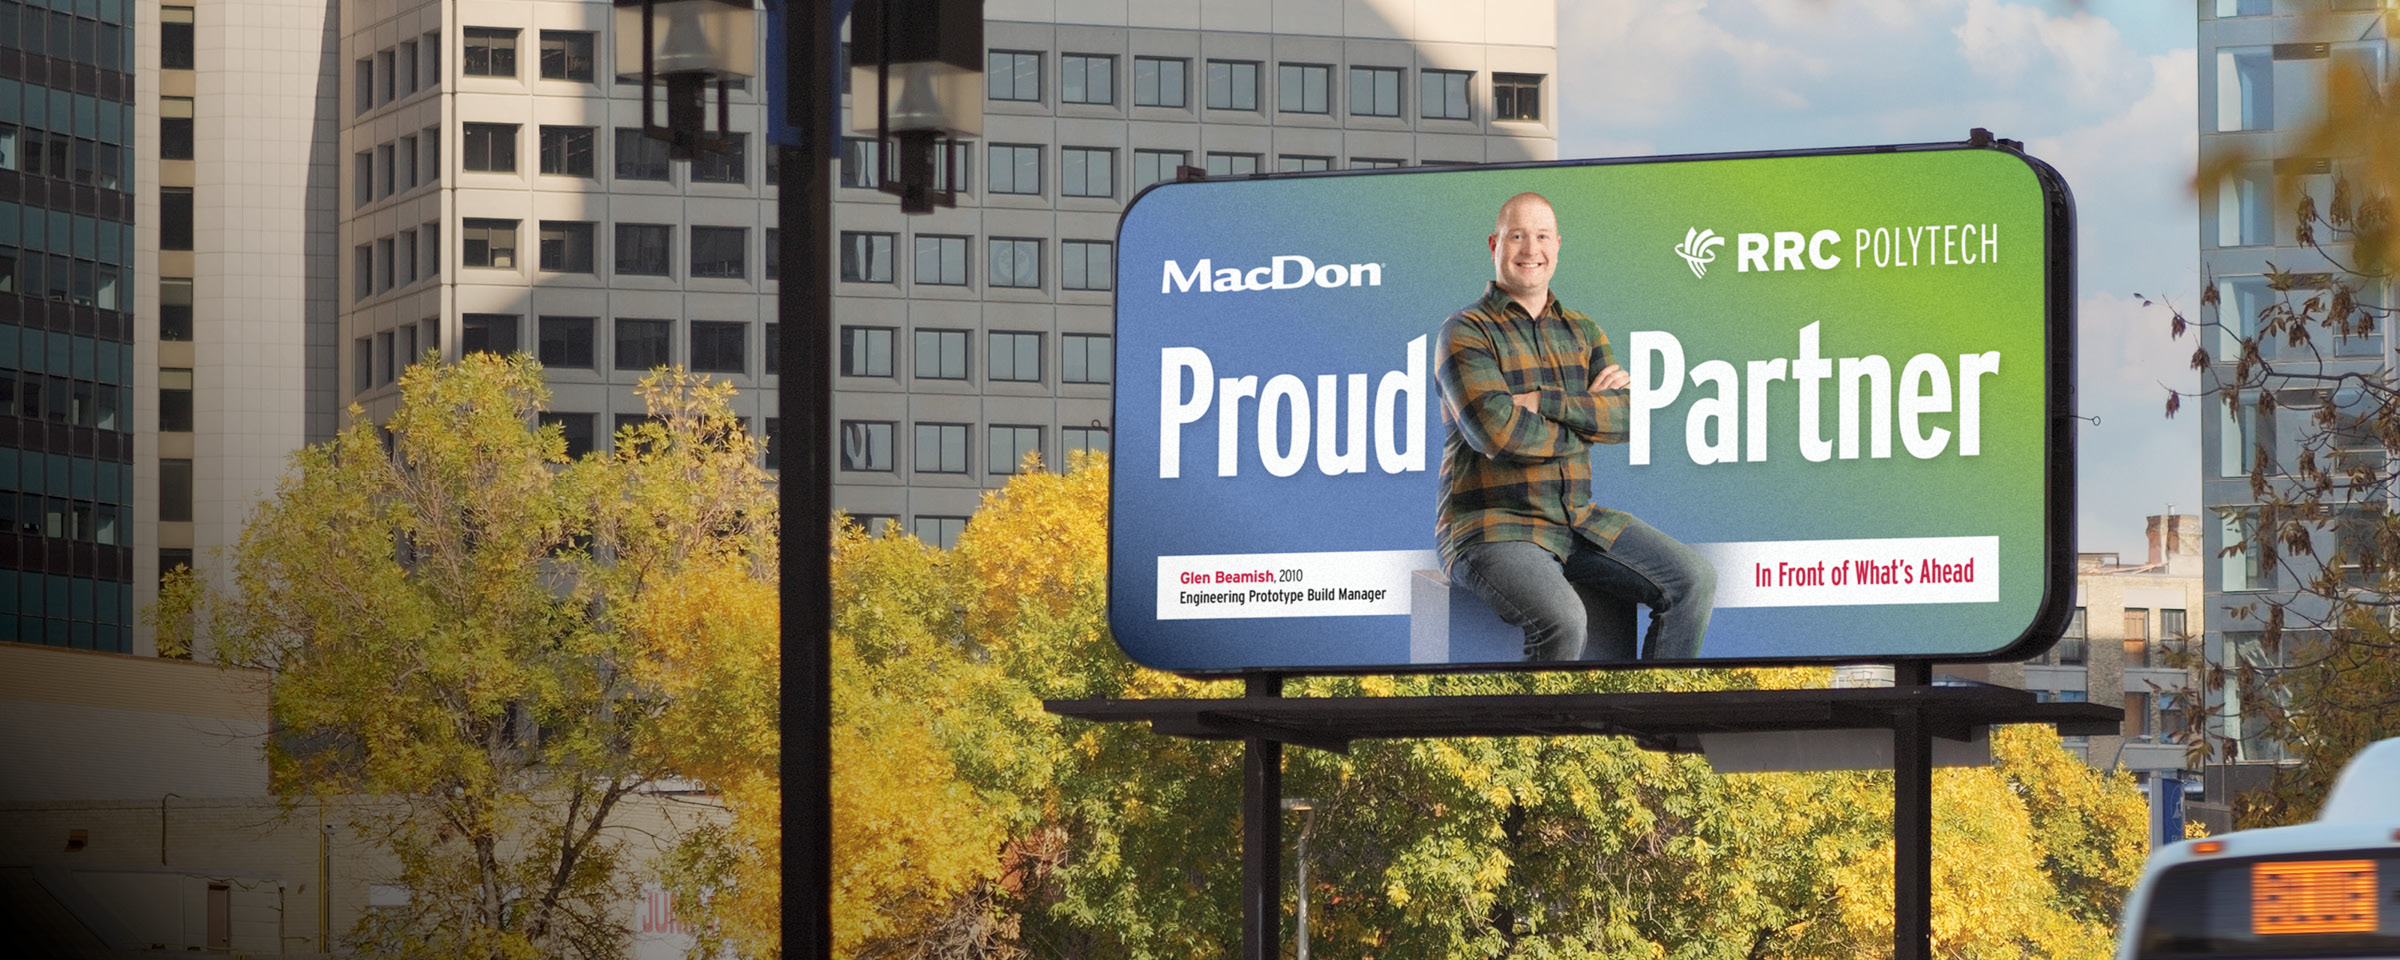 Winnipeg skyline with "Proud Partner" billboard of RRC Polytech graduate Glen Beamish.